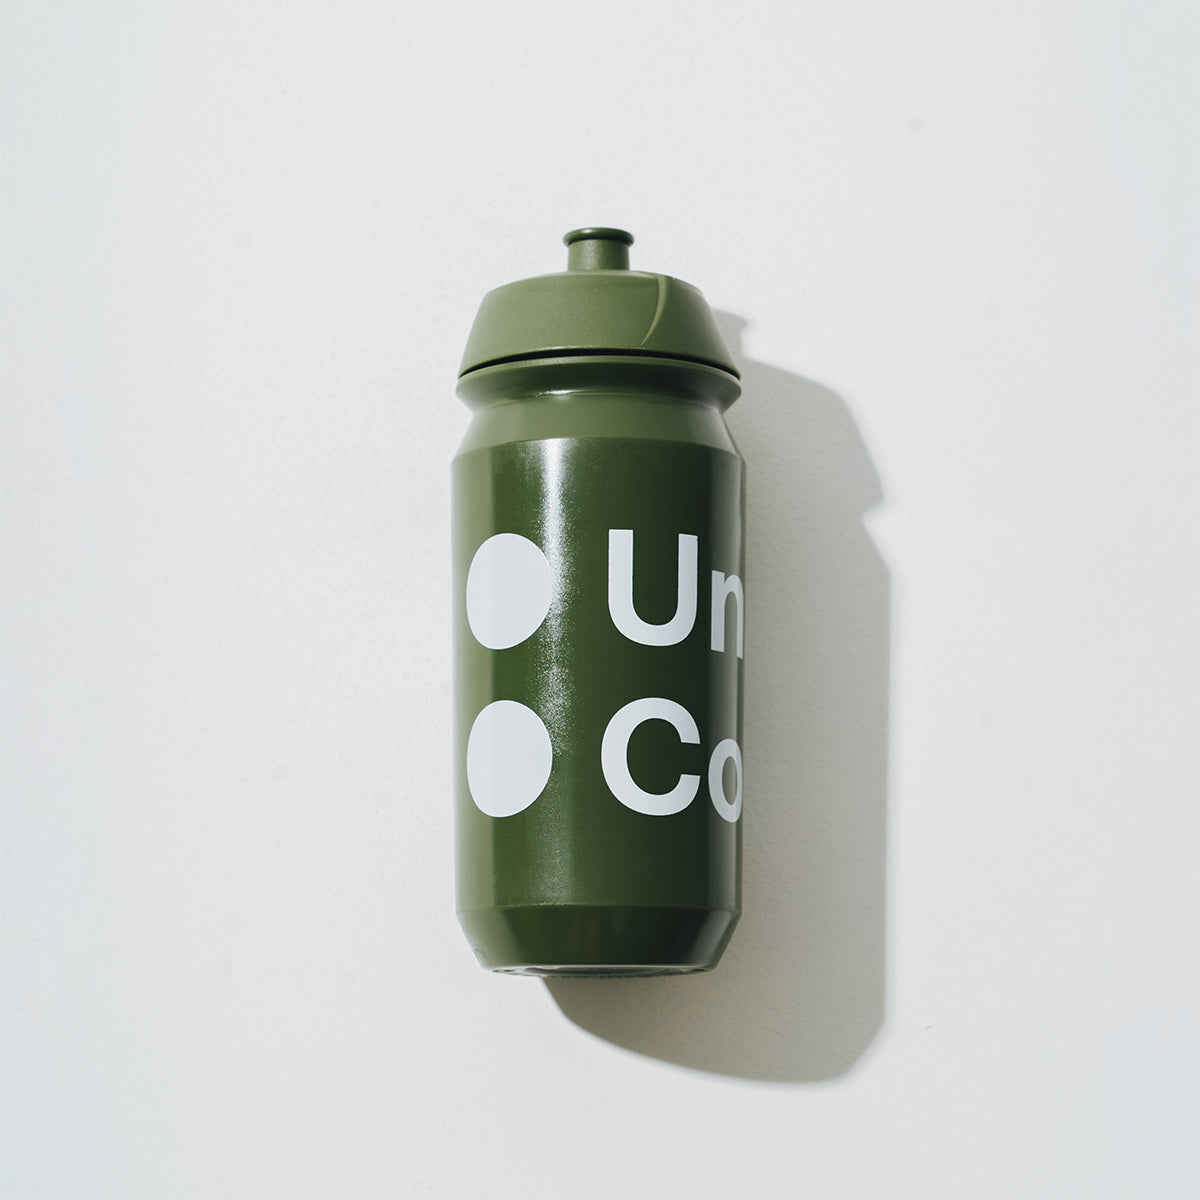 Biodegradable Bottle 500ml - Olive Green